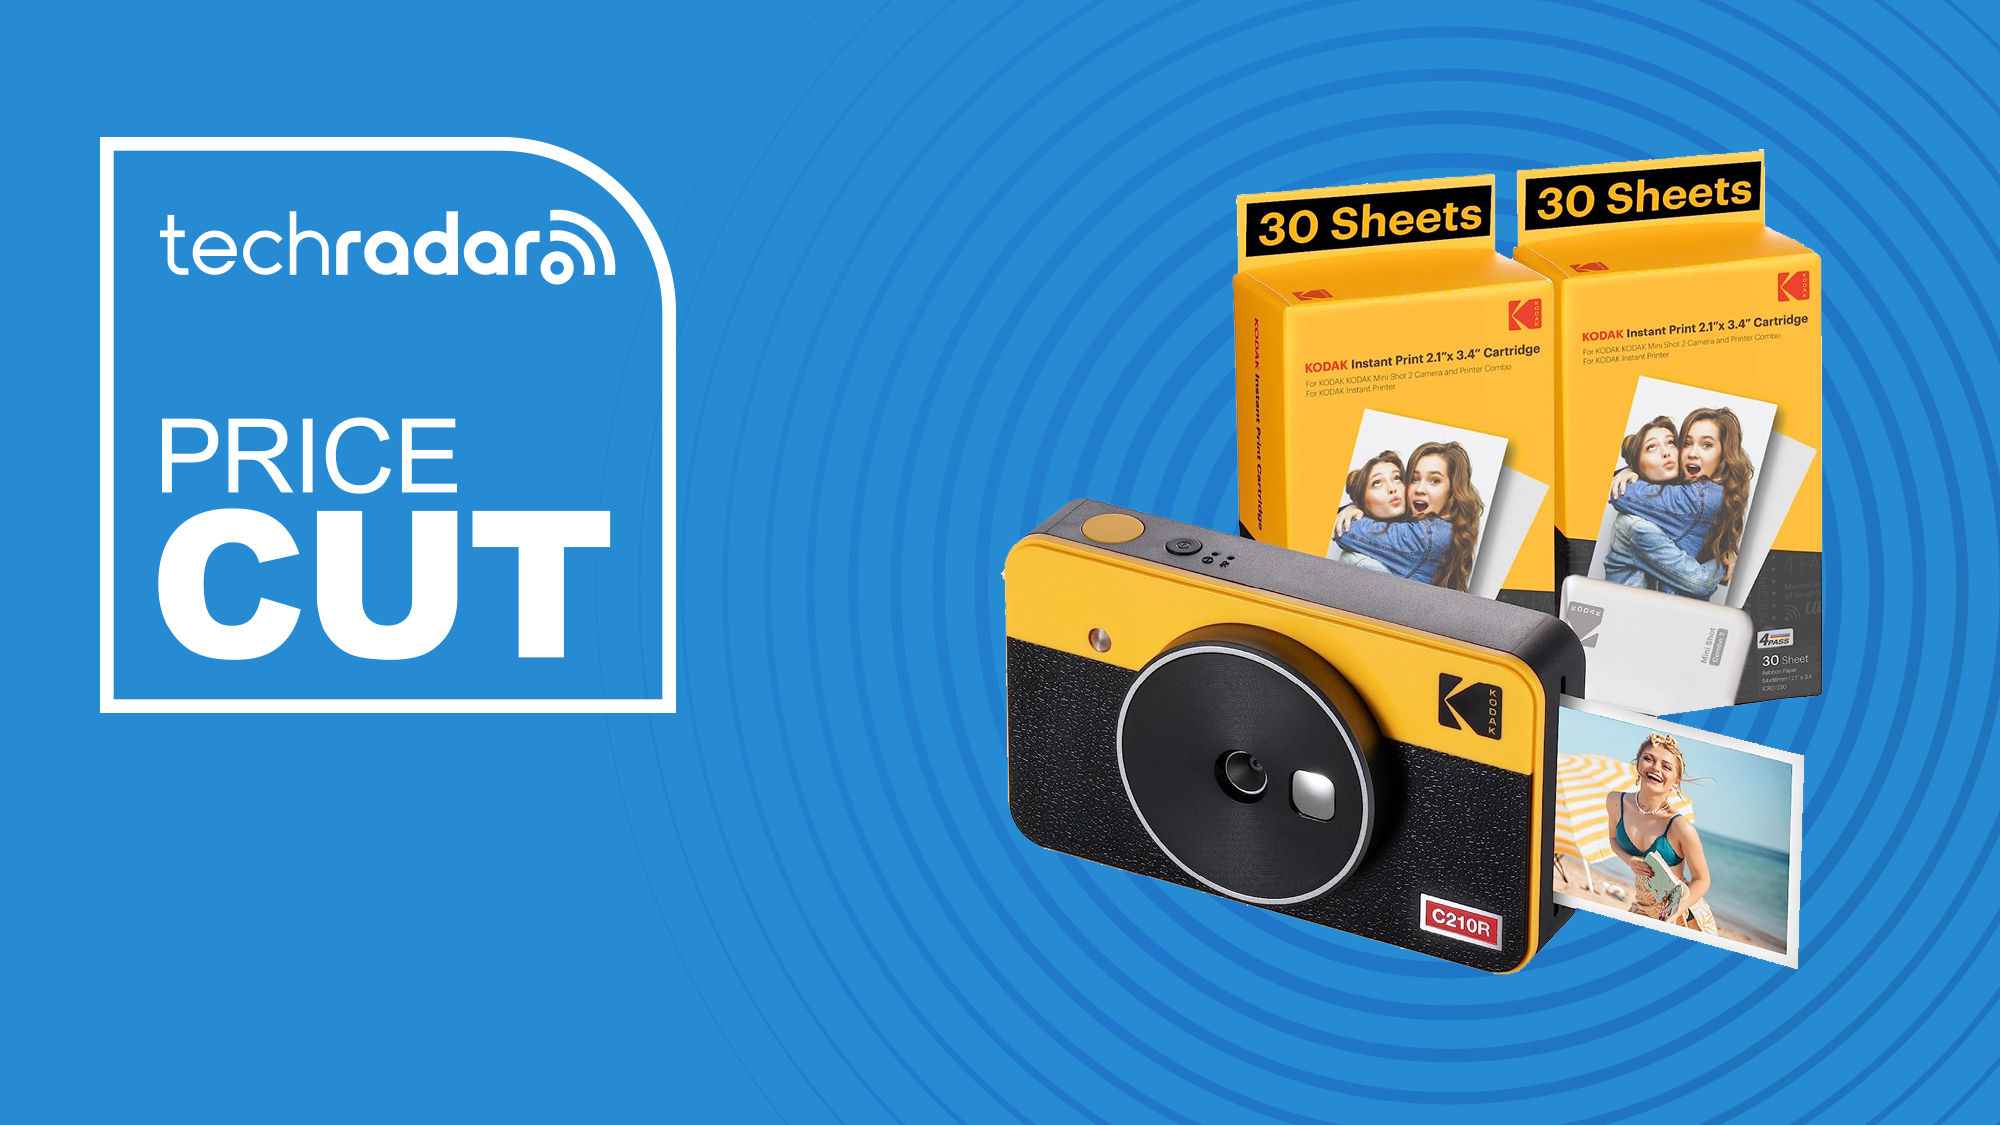 The Kodak Mini Shot 2 Retro Is a Fun Way To Capture & Print